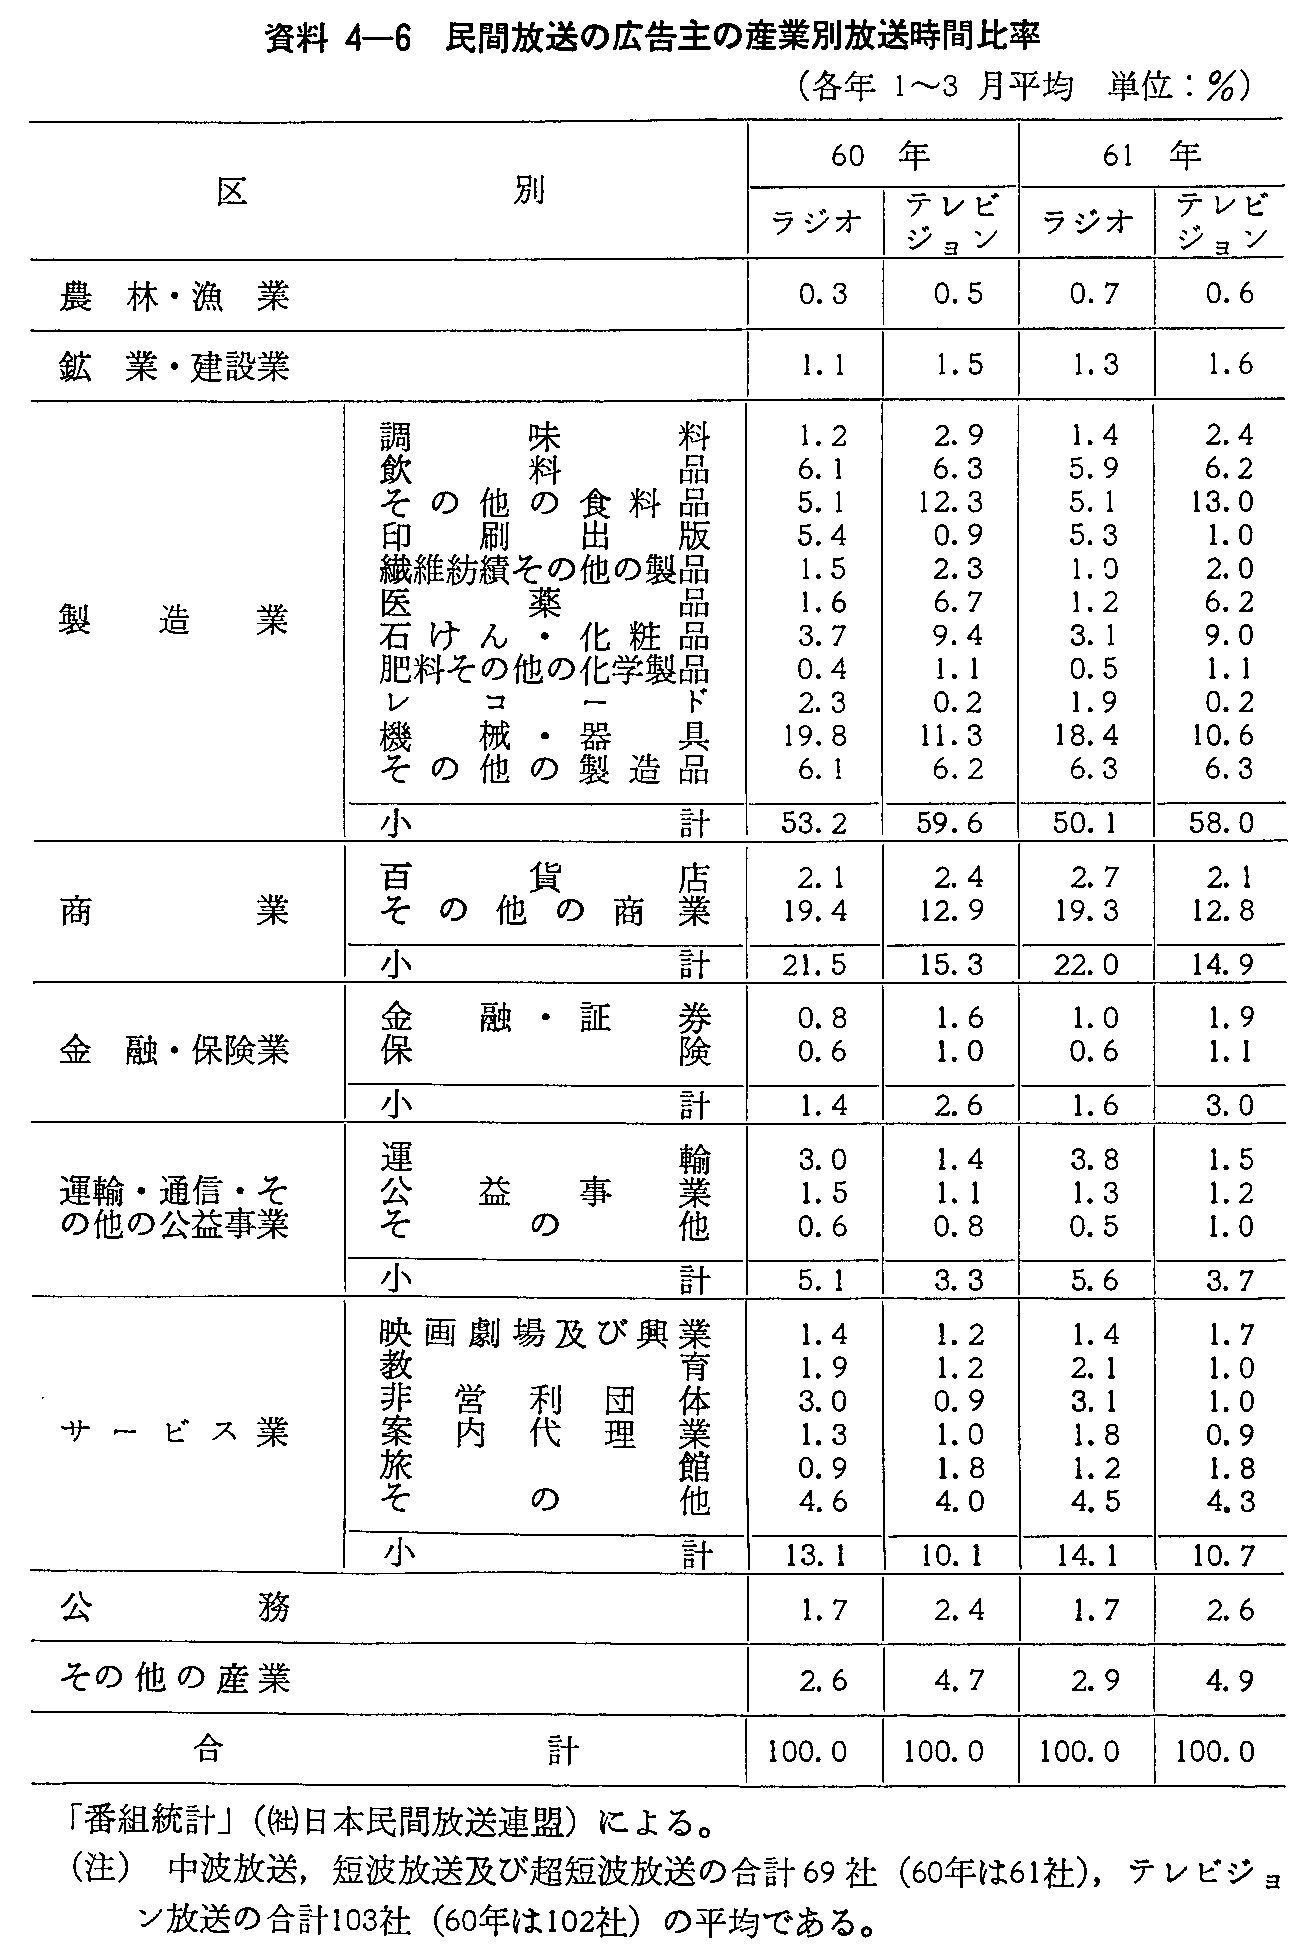 4-6 ԕ̍L̎YƕʕԔ䗦(eN1`3)